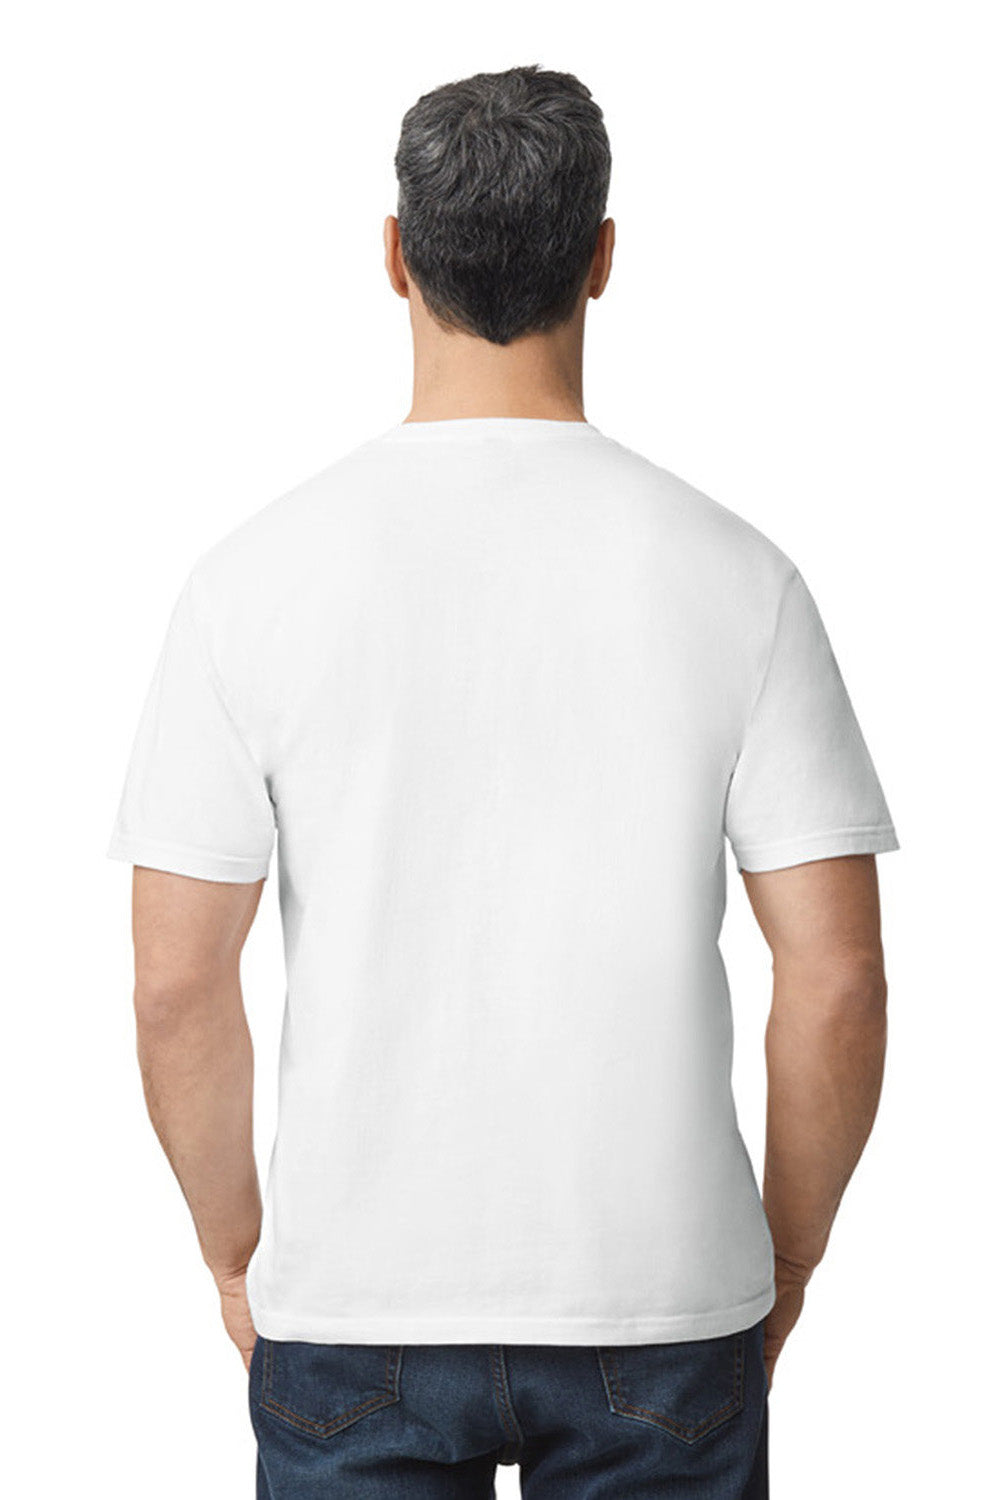 Gildan G650 Mens Softstyle Short Sleeve Crewneck T-Shirt White Back